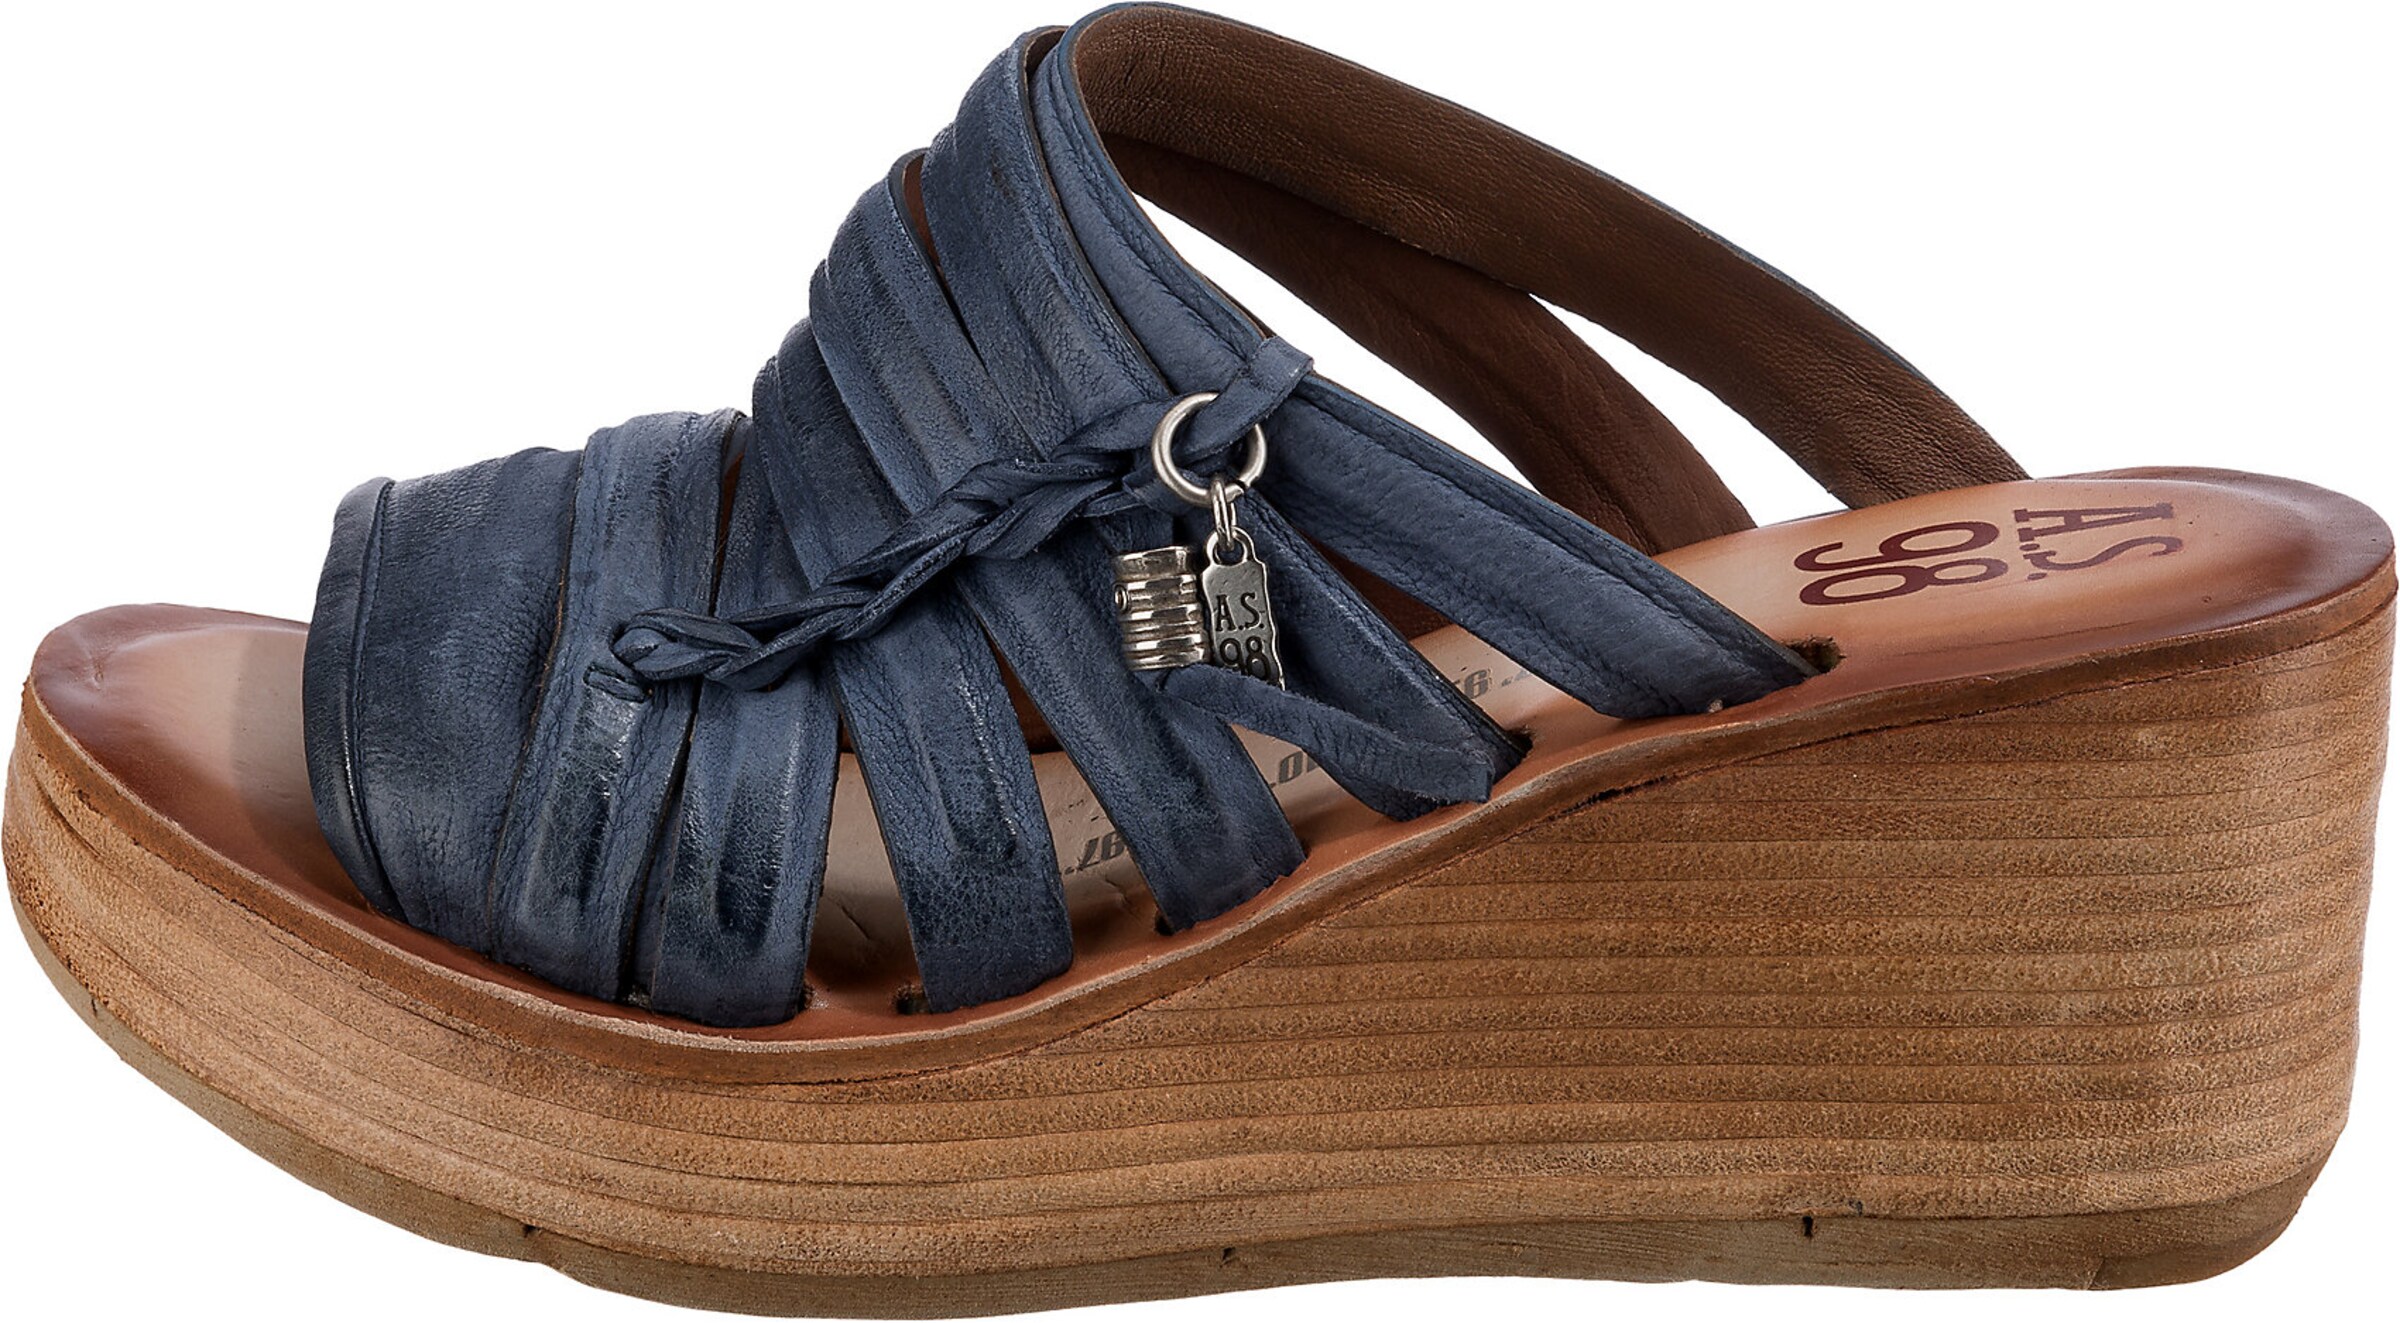 Damen Schuhe Absätze Sandalen mit Keilabsatz A.s.98 Pantolette noa in Schwarz 